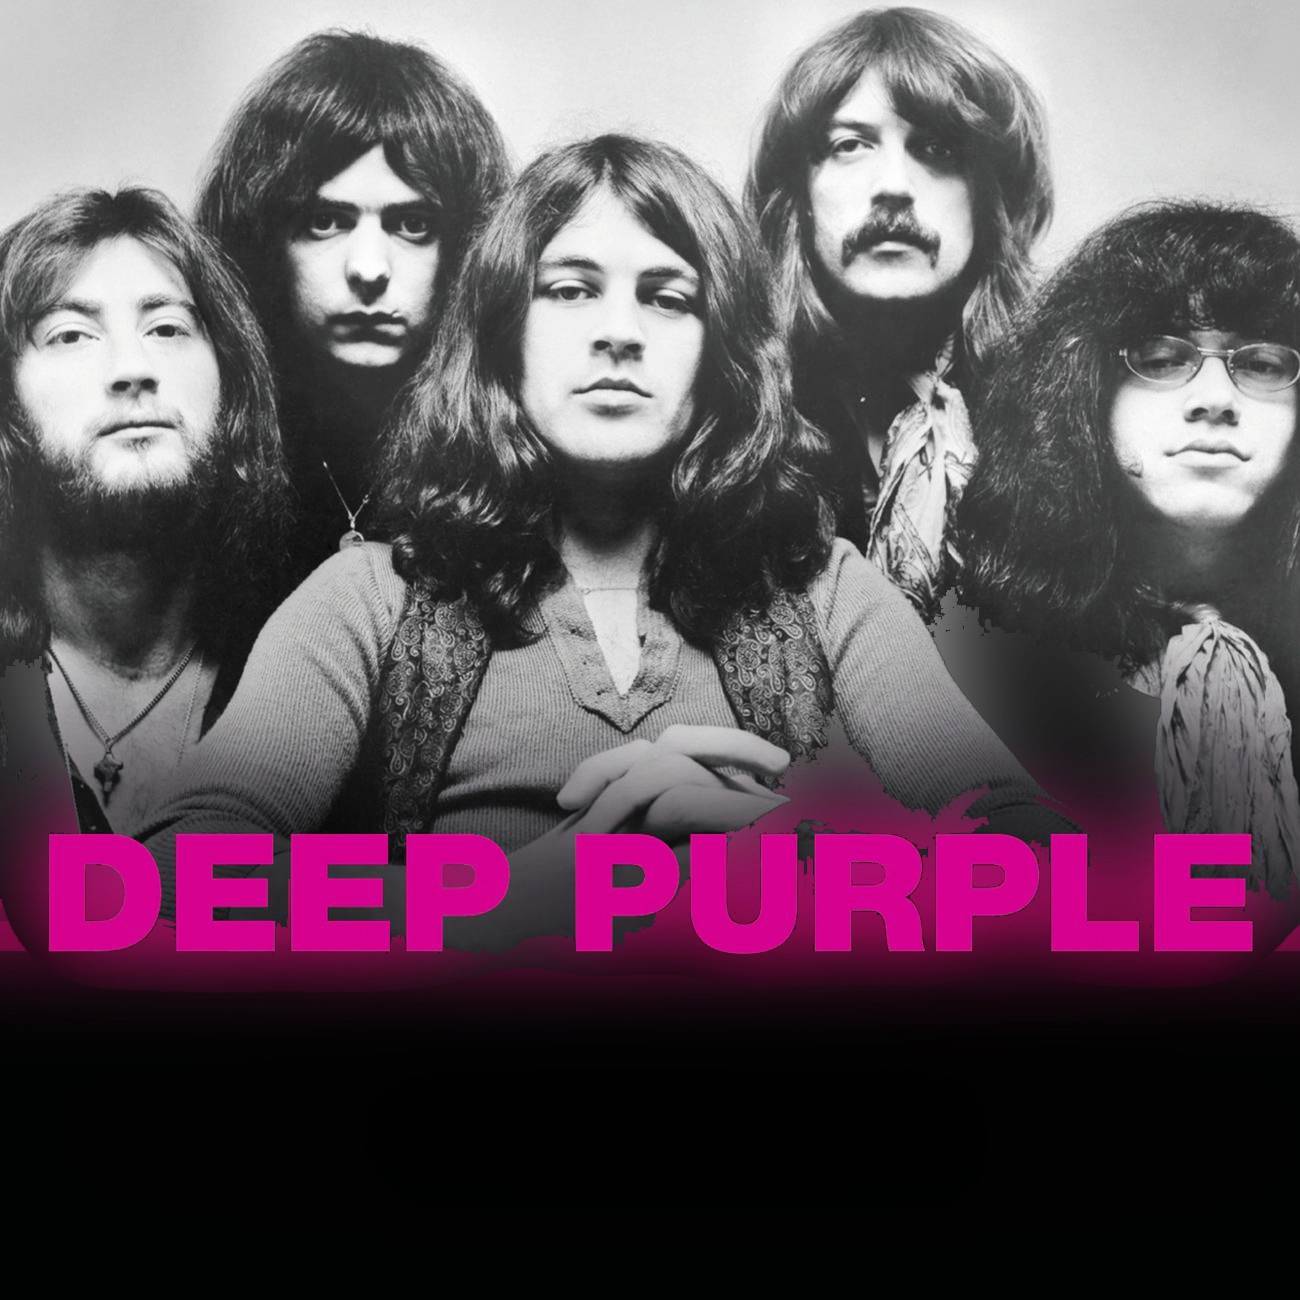 1920x1363px Deep Purple (522.95 KB).09.2015